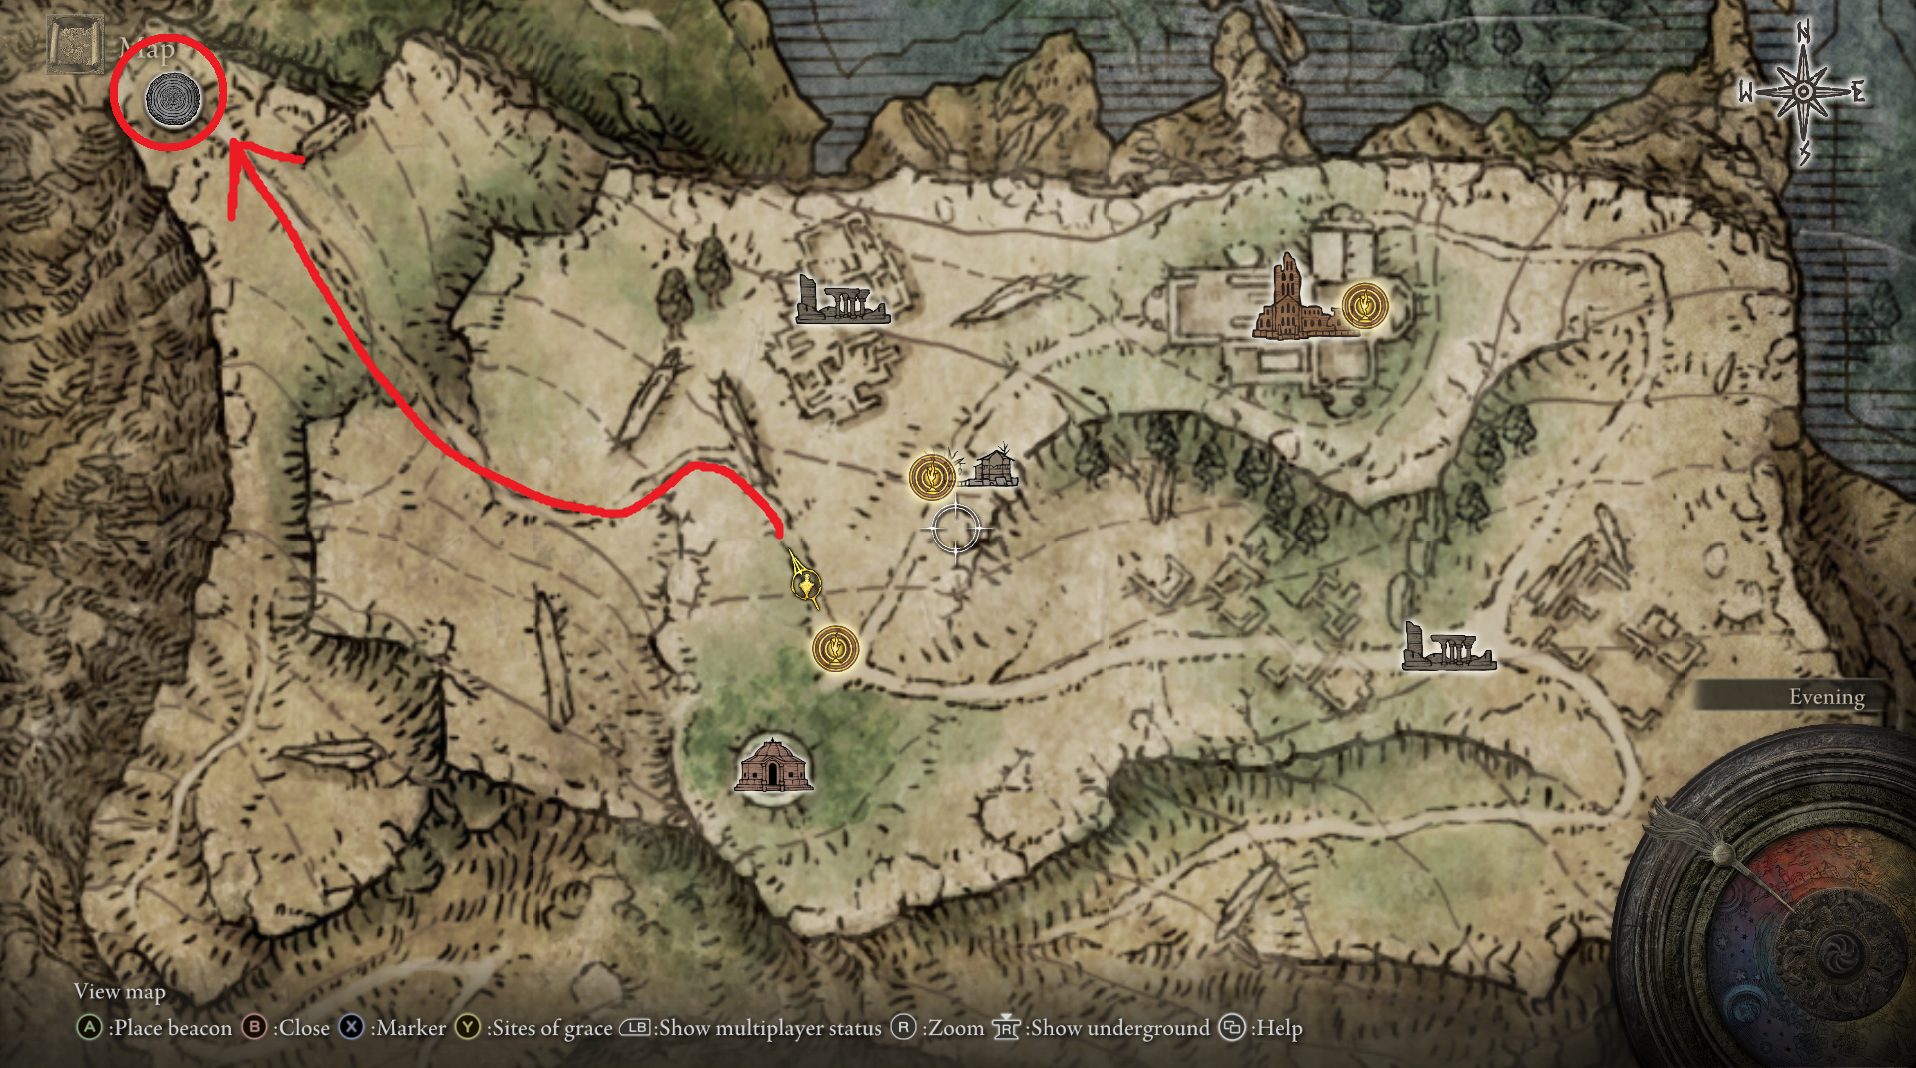 Elden Ring: Ranni Complete Questline Guide - How To Get The DARK MOON  GREATSWORD (Ranni's Quest) 